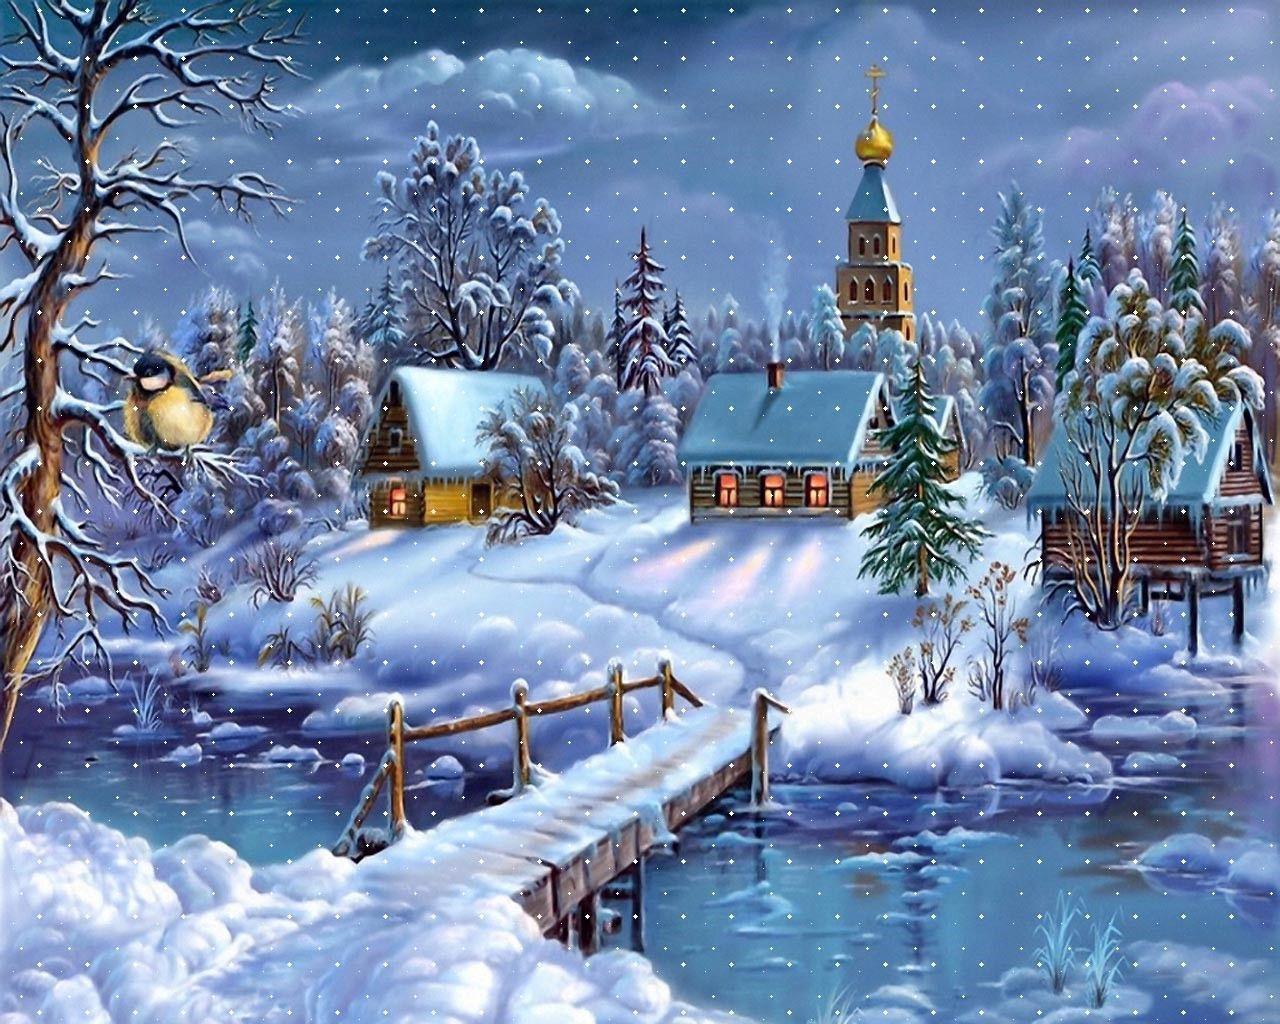 Snowy Christmas Night on Holiday Image